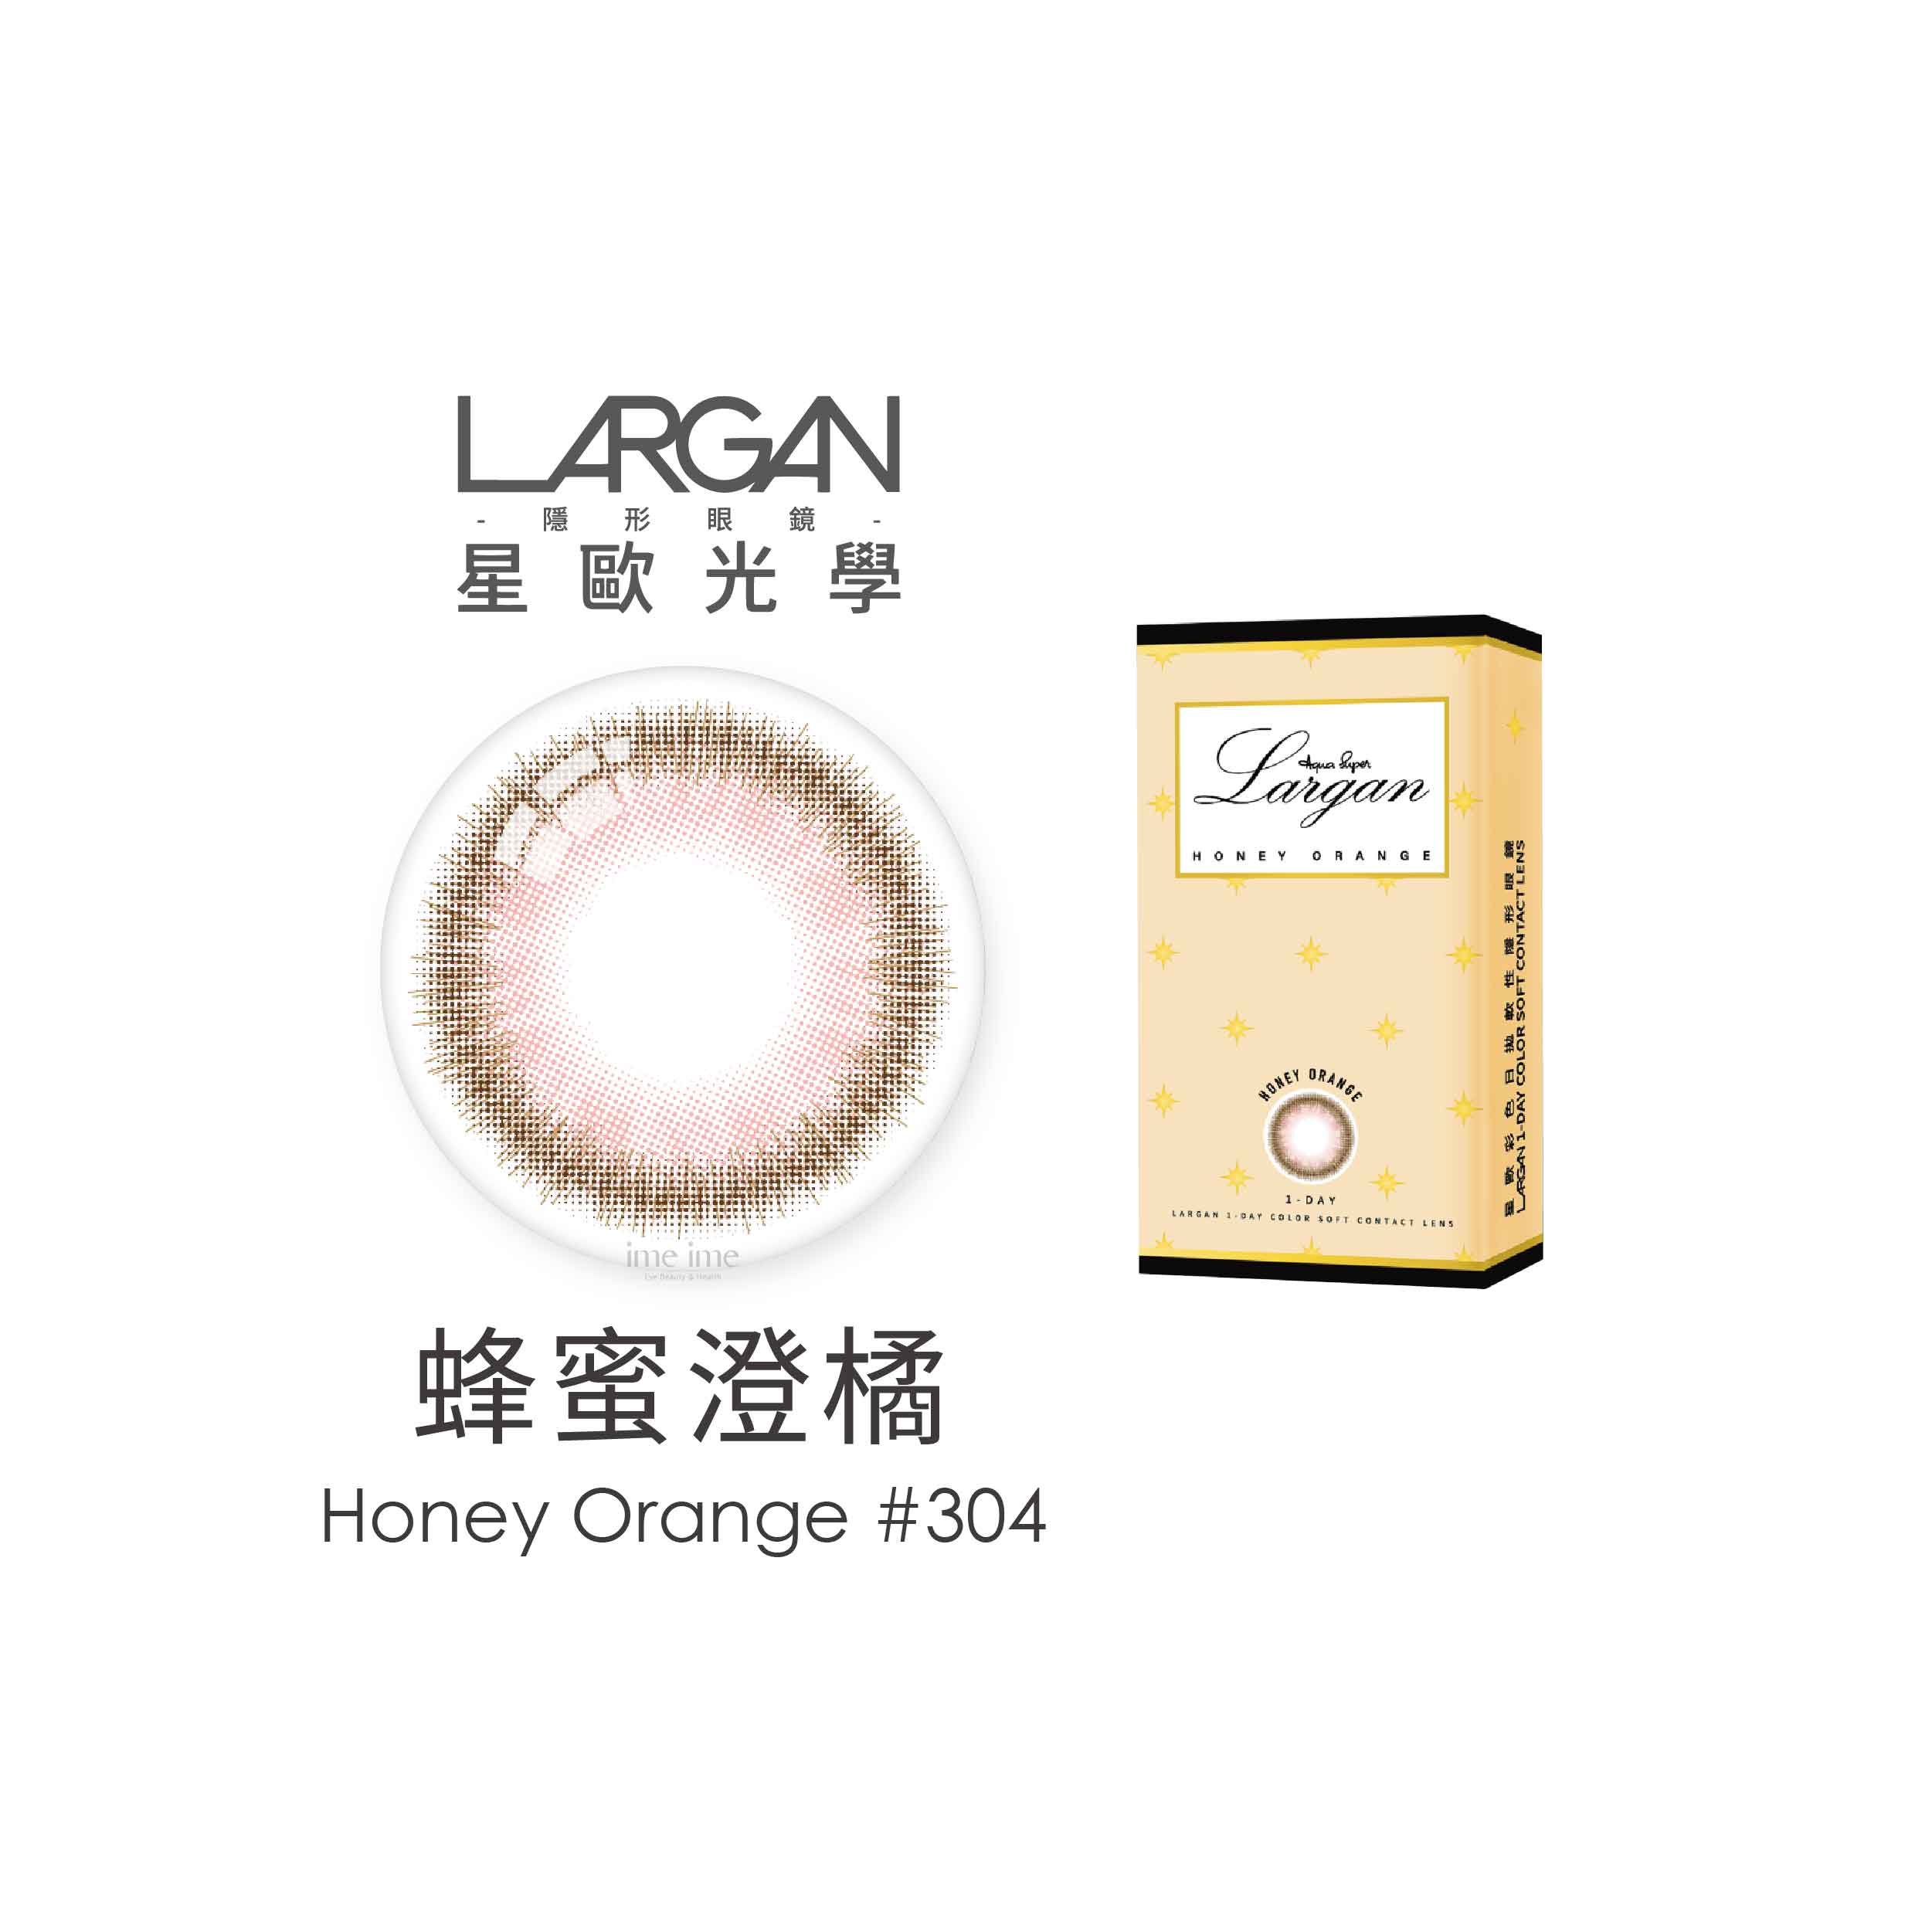 LARGAN星歐星星系列彩色日拋2片裝-蜂蜜澄橘 Honey Orange